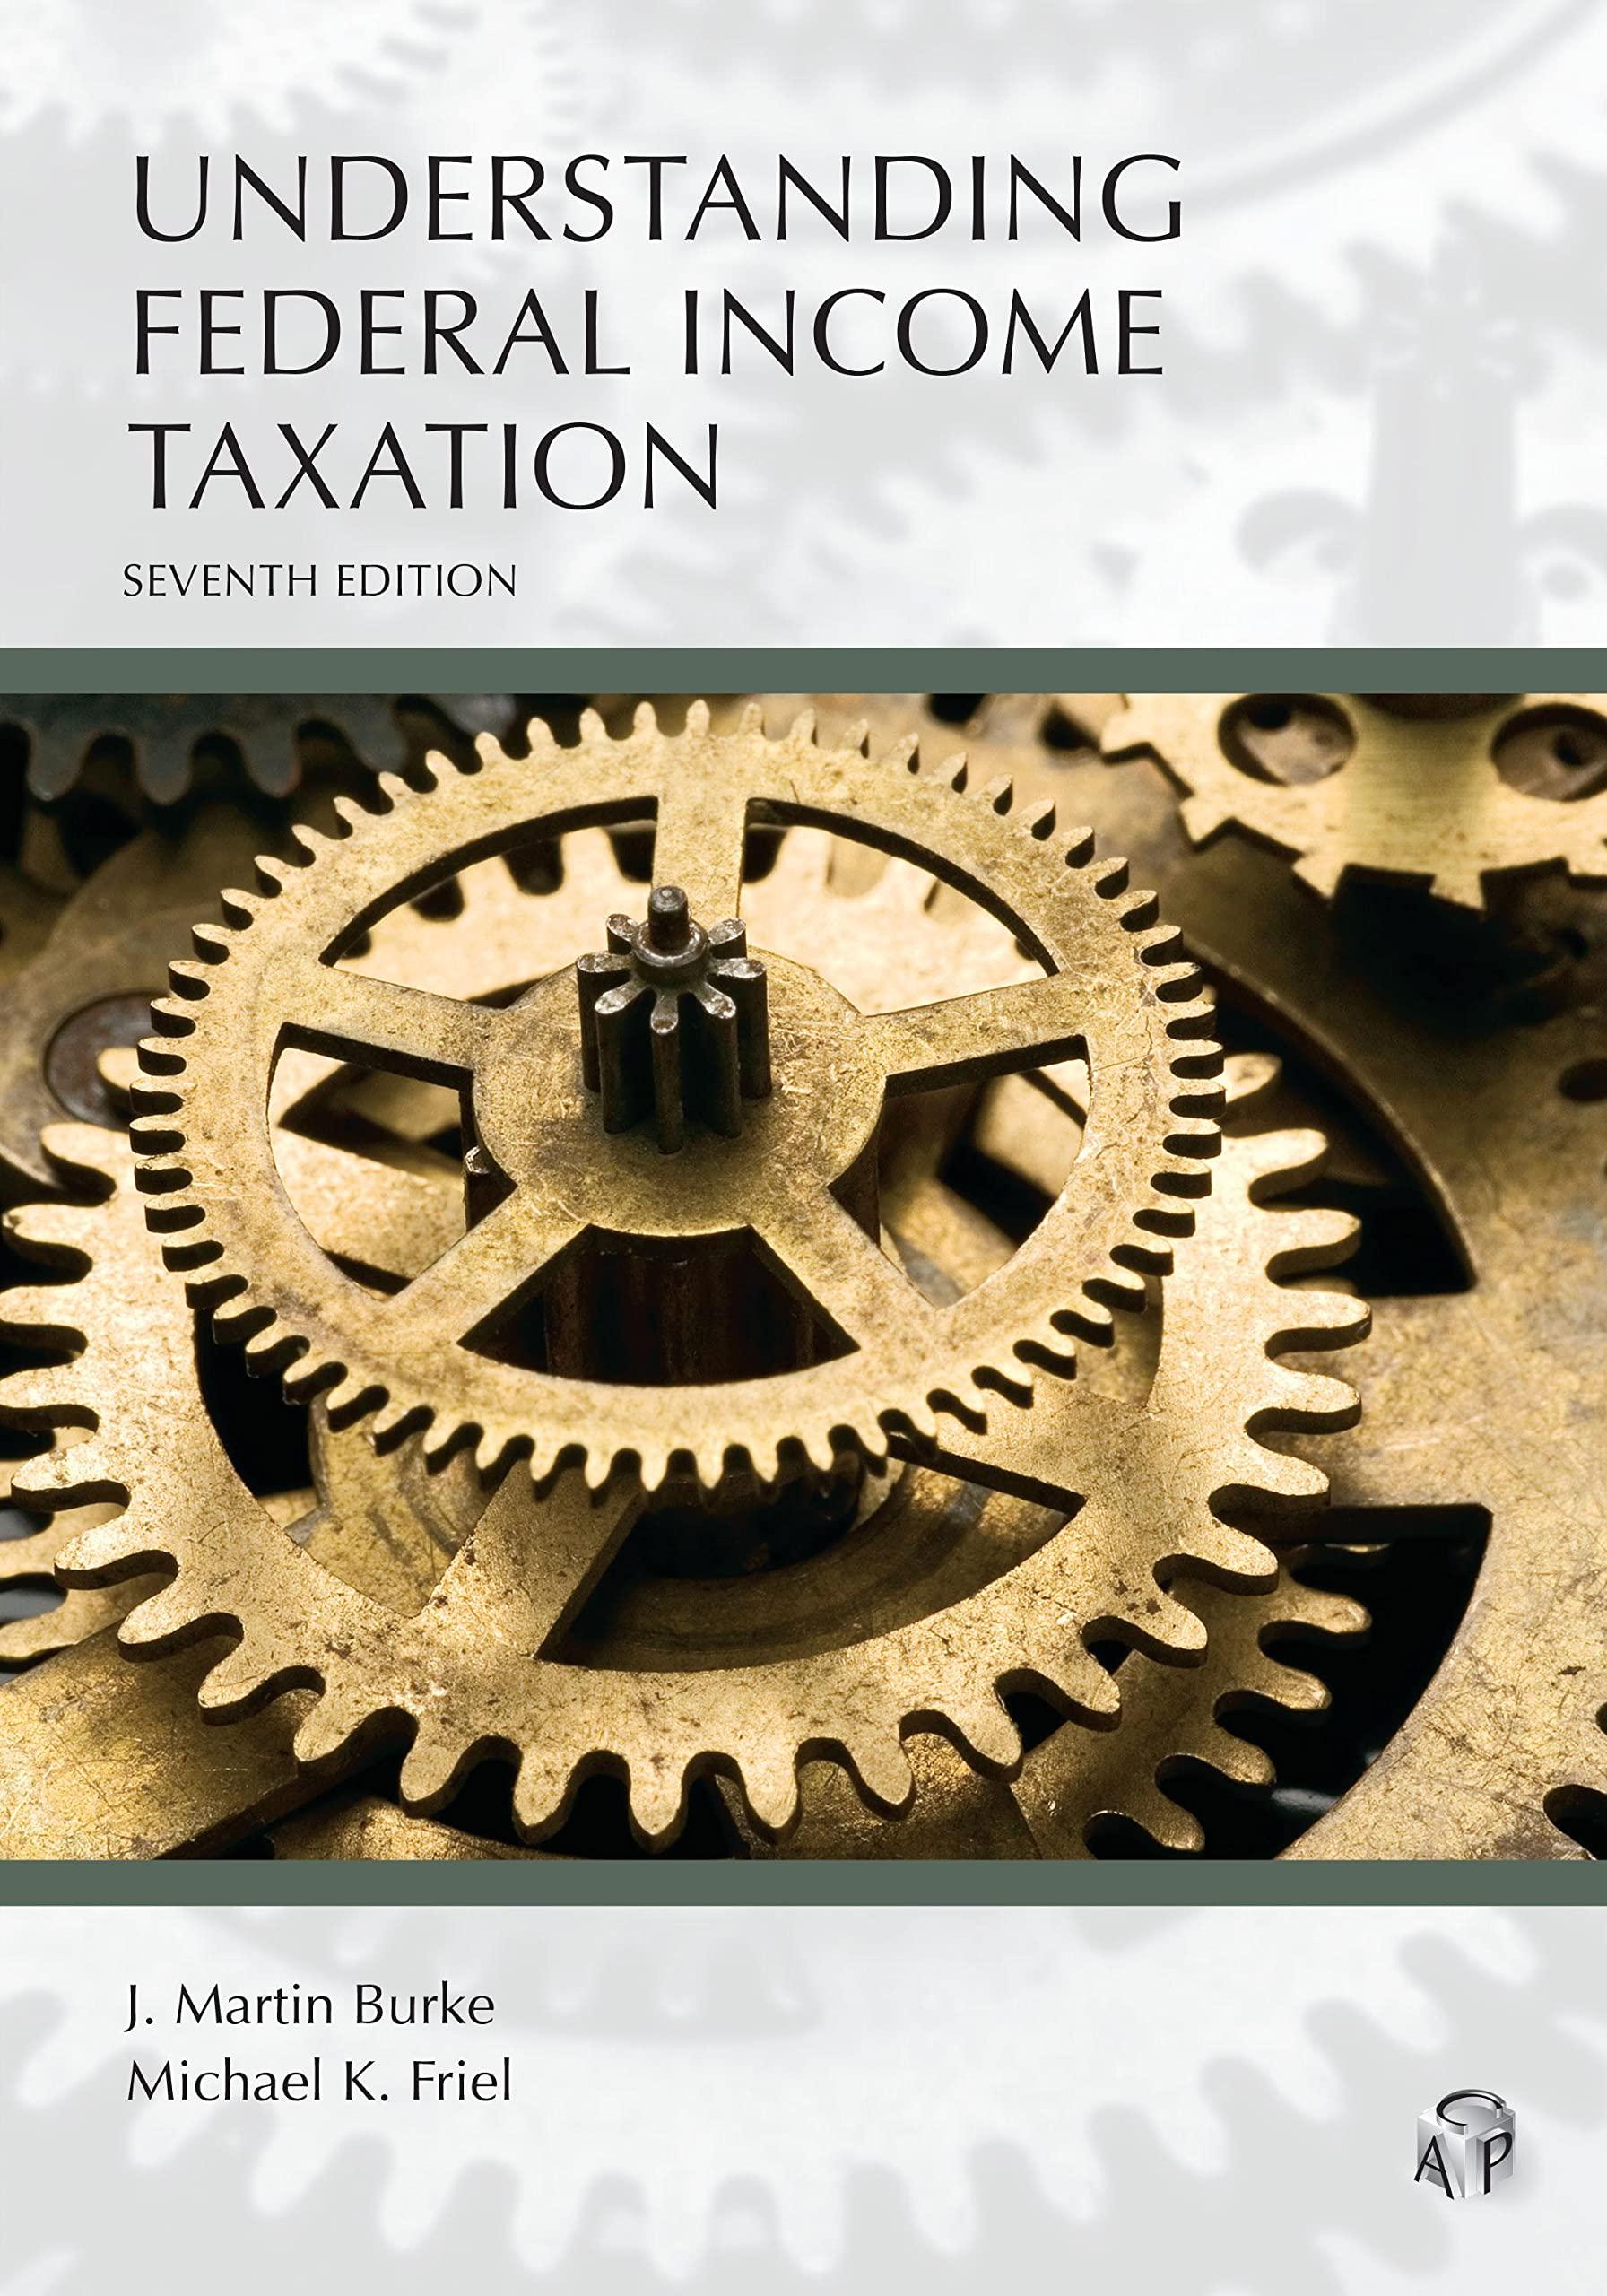 understanding federal income taxation 7th edition j. martin burke, michael friel 1531026486, 9781531026486